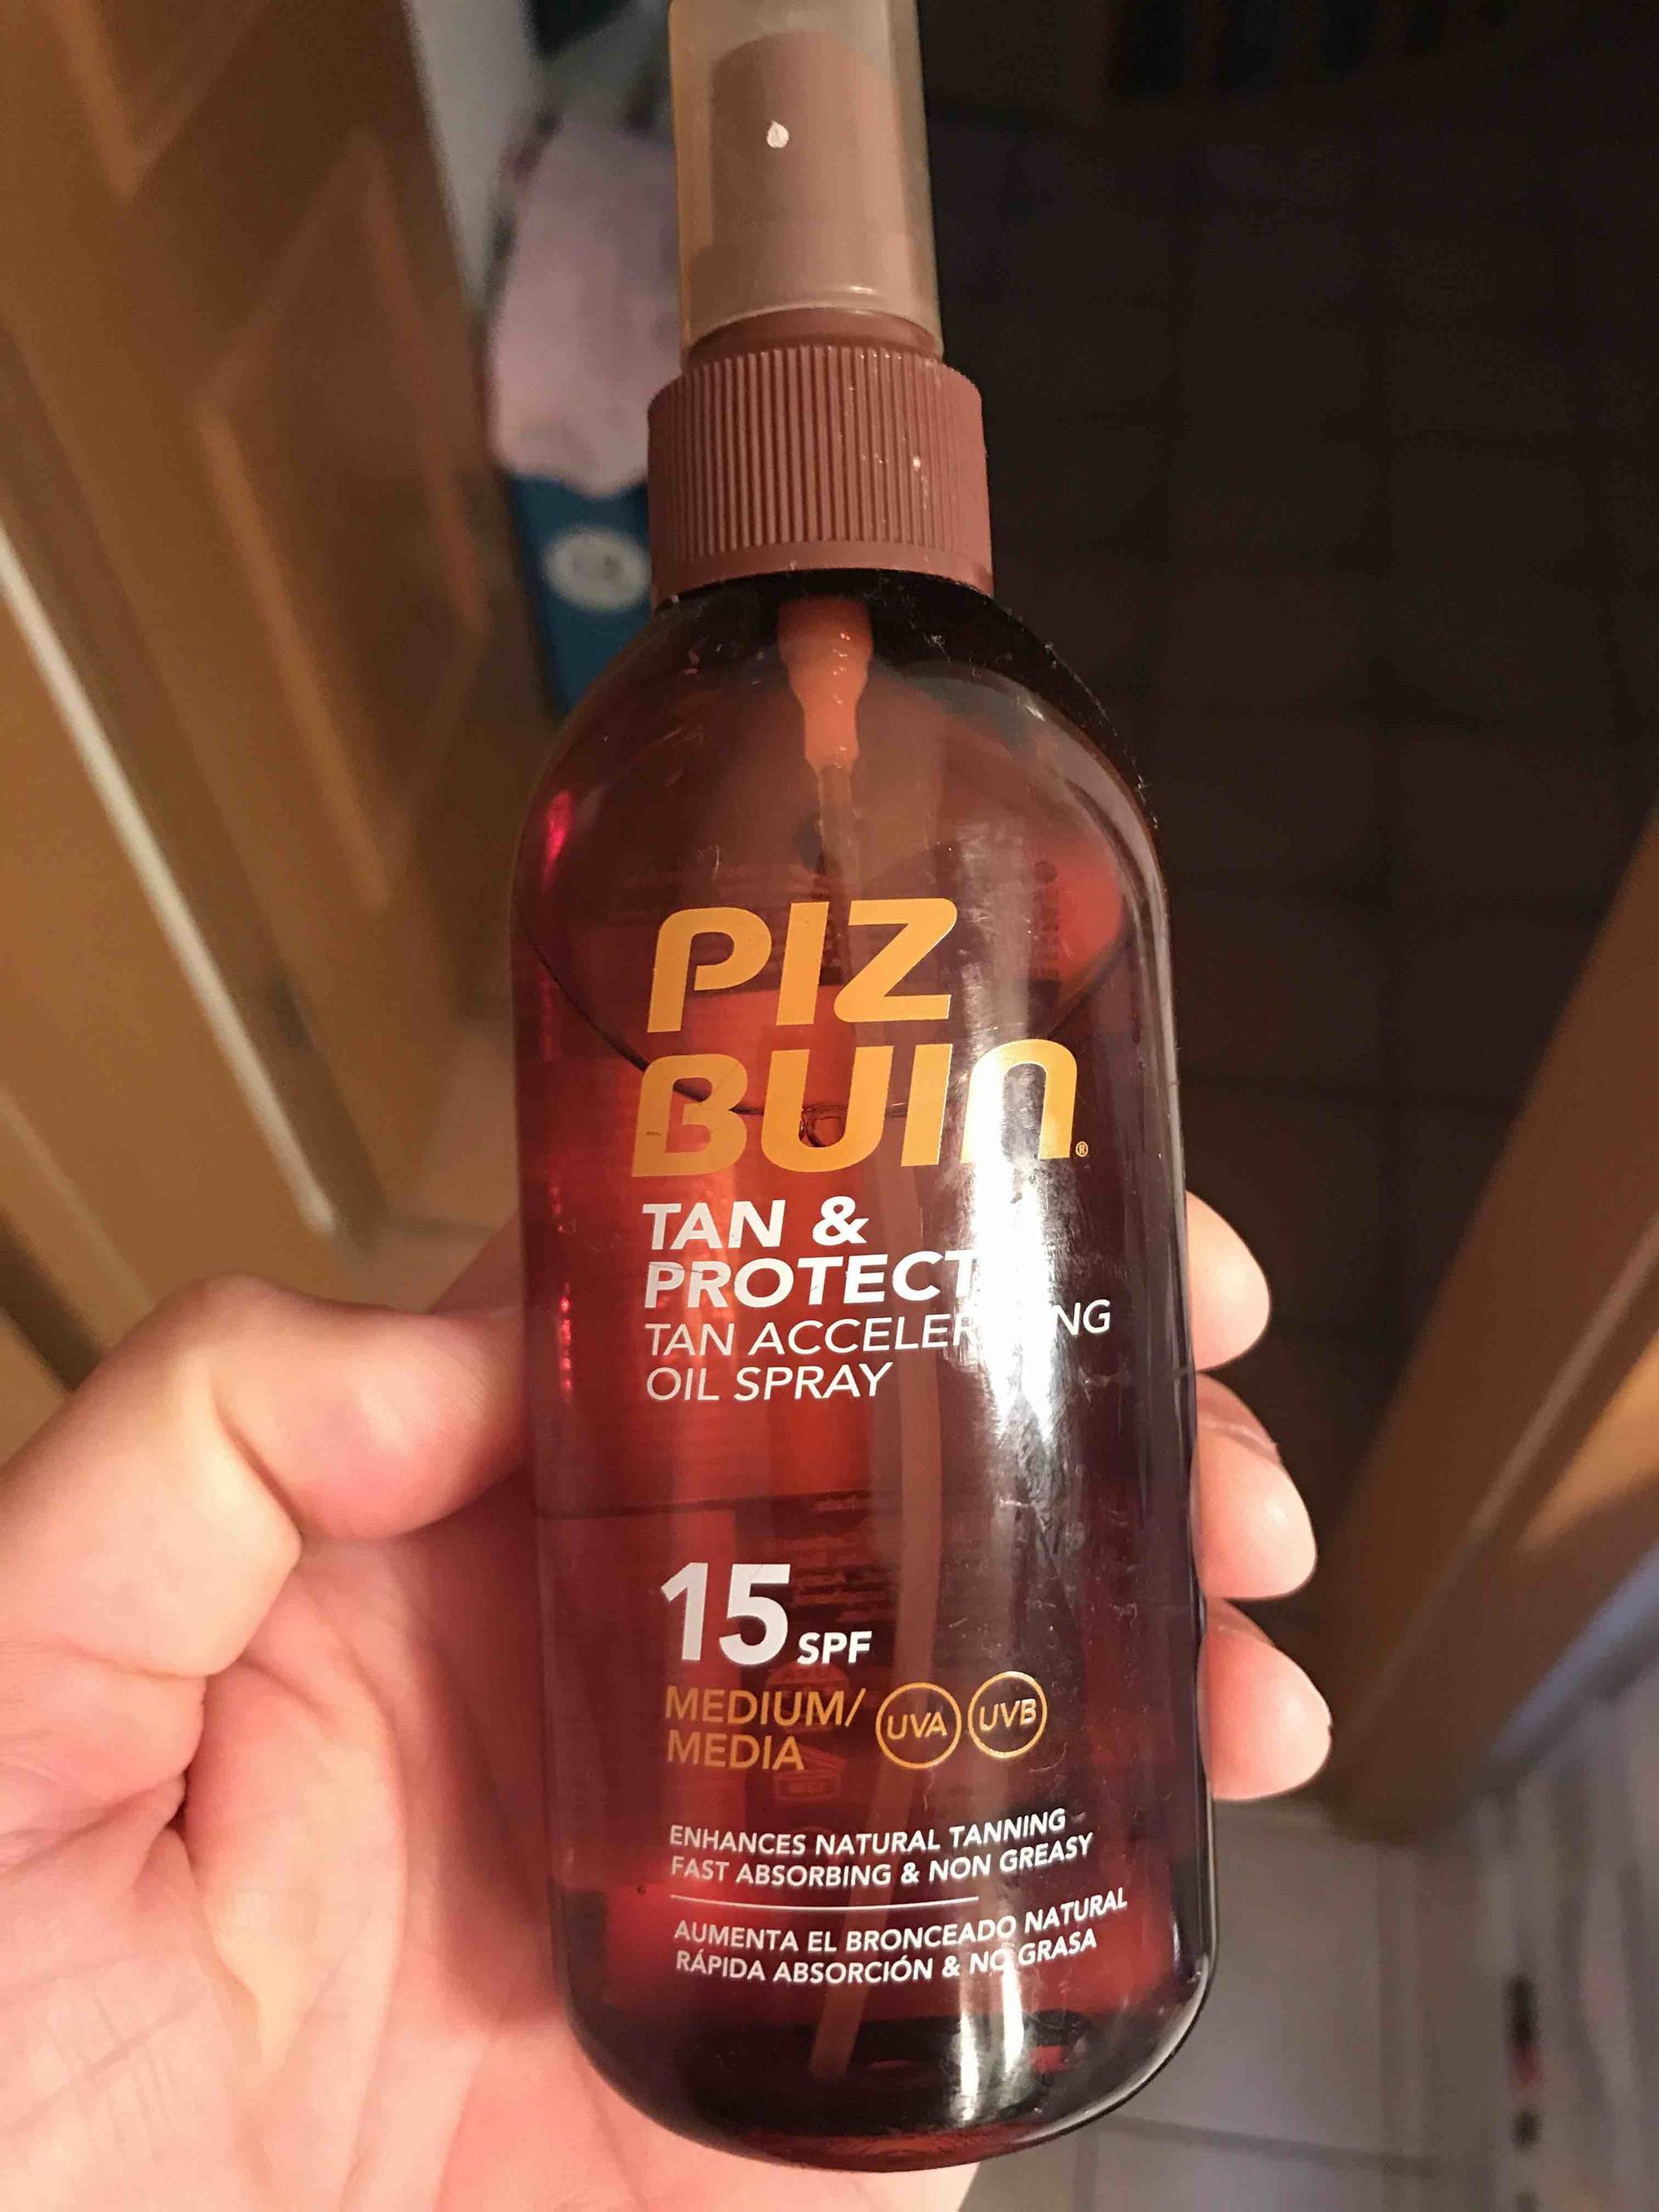 PIZ BUIN - Tan & protect - Tan accelerating oil spray spf 15 